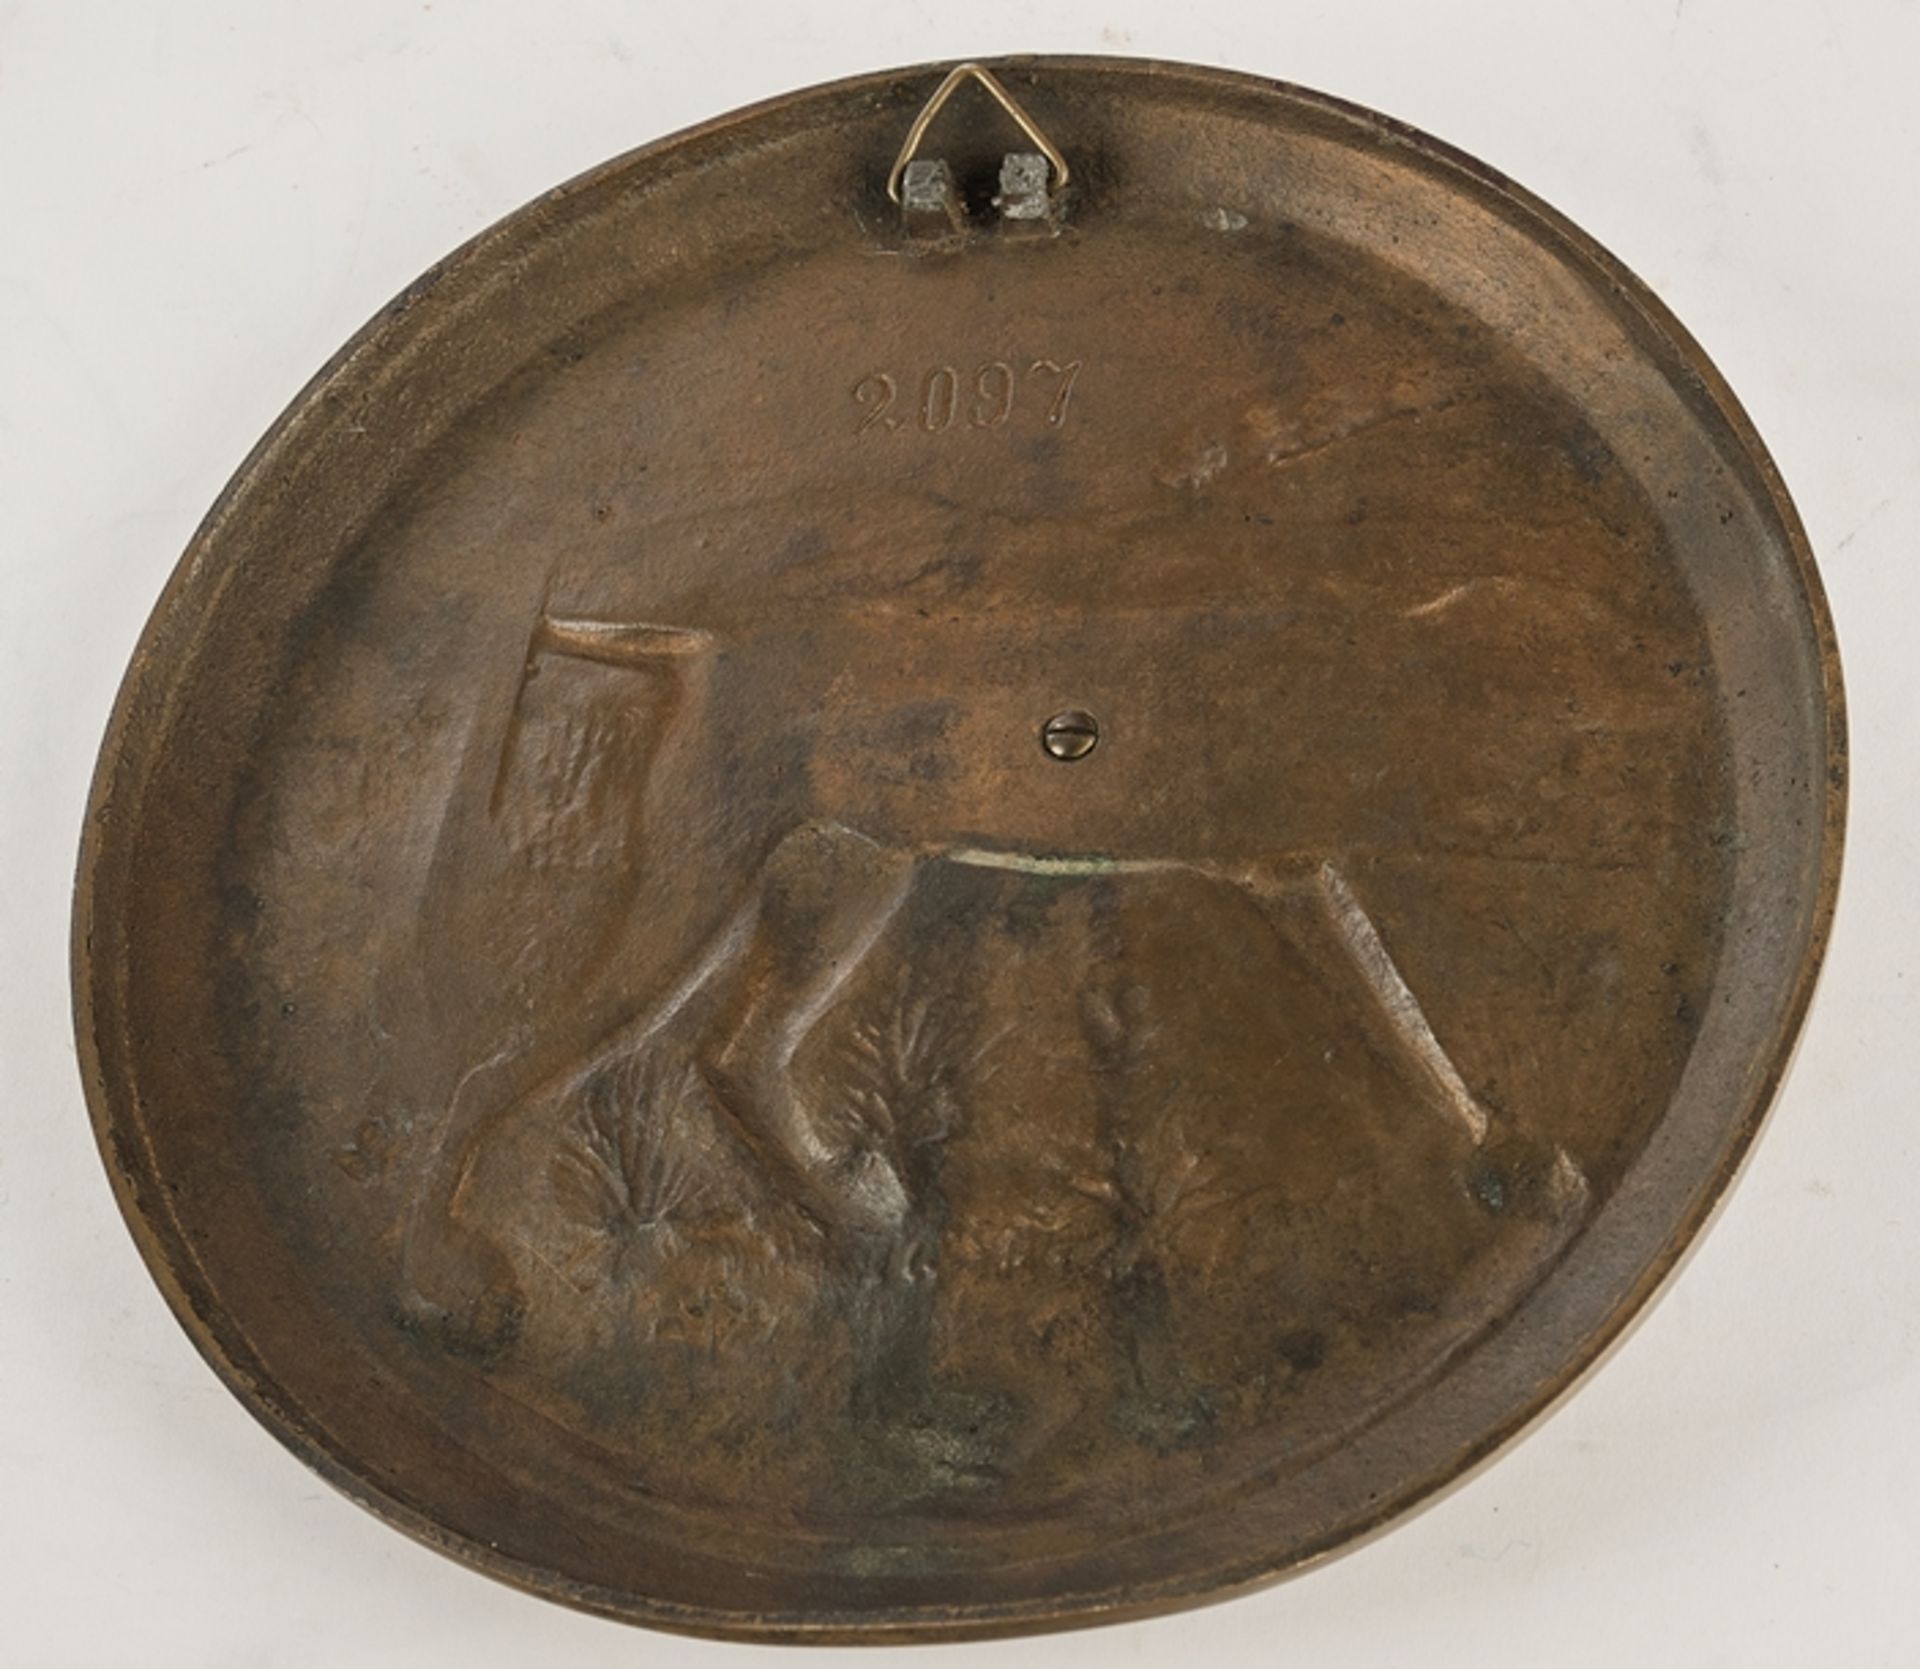 Teller mit Jagdhund-Motiv, Bronze, um 1900, rückseitig Modell-Nr. 2097, ø 22.5 cm, Rand leicht best - Bild 2 aus 2